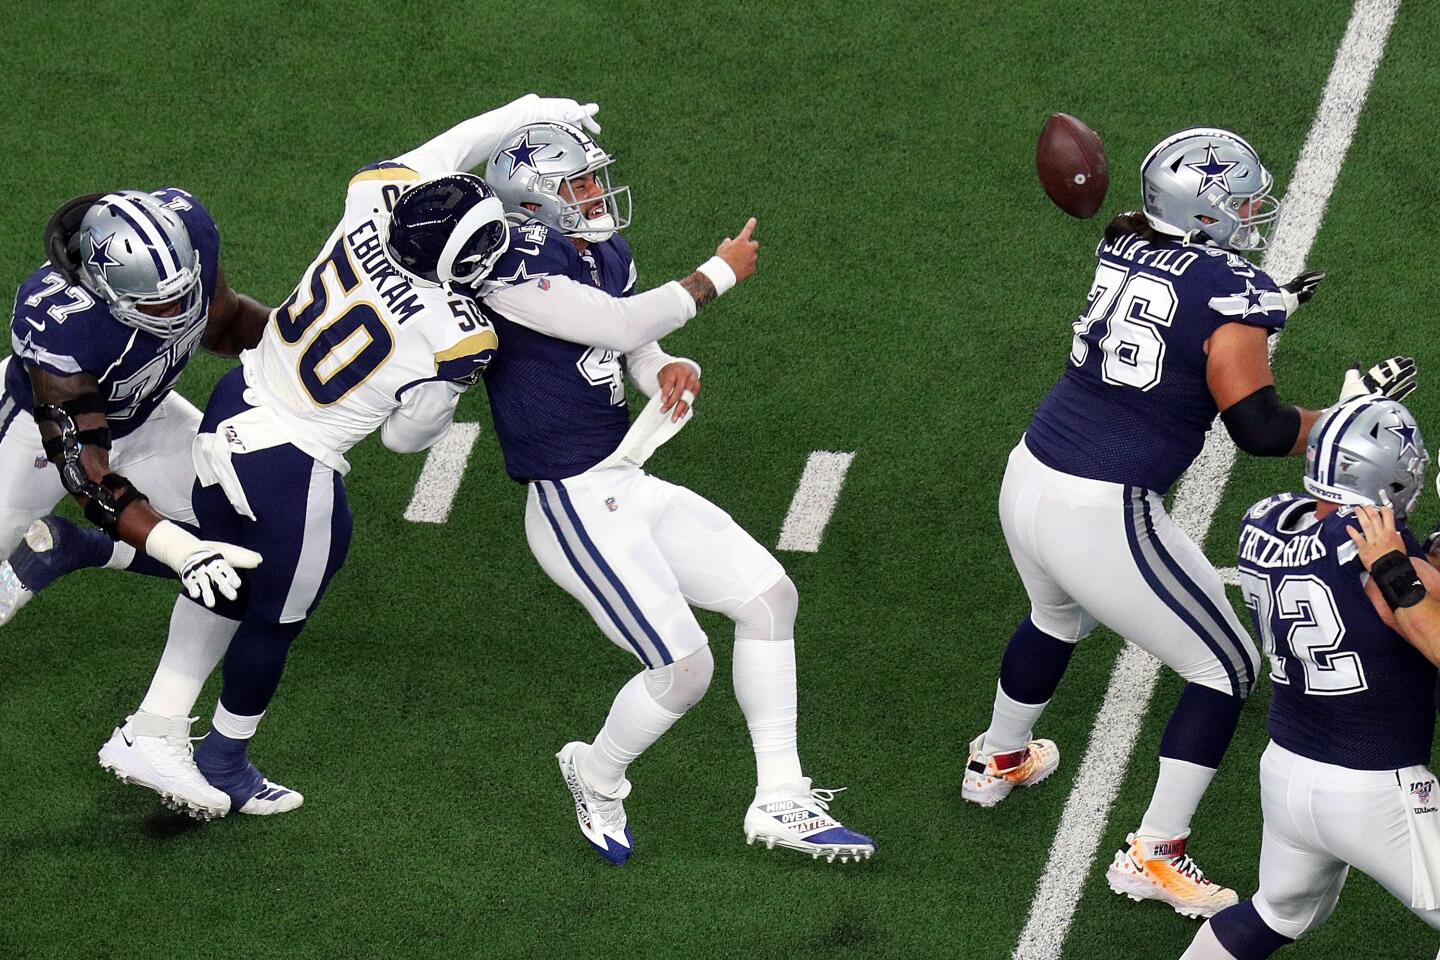 Rams linebacker Samson Ebukam, left, breaks up a pass by Dallas Cowboys quarterback Dak Prescott during the first quarter.